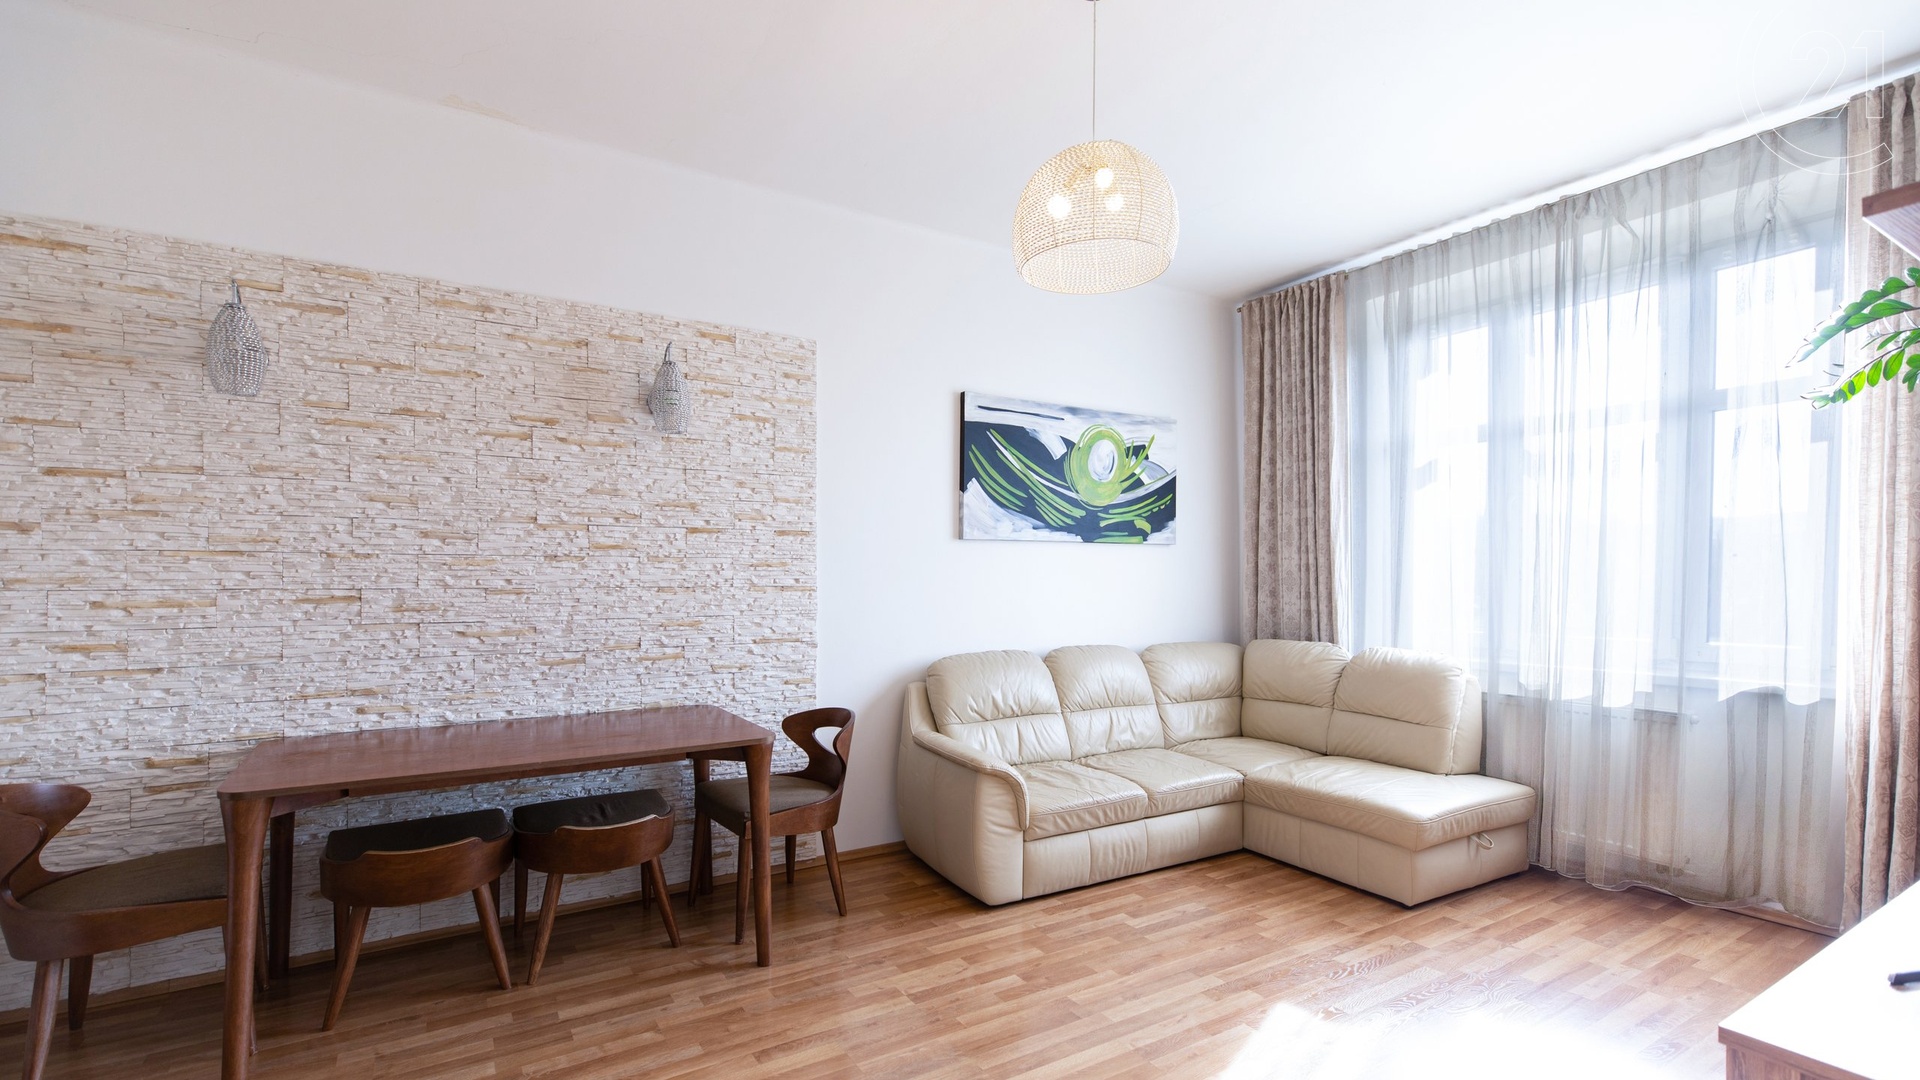 Prodej bytu 3+kk 65 m² se sklepem, Praha - Libeň